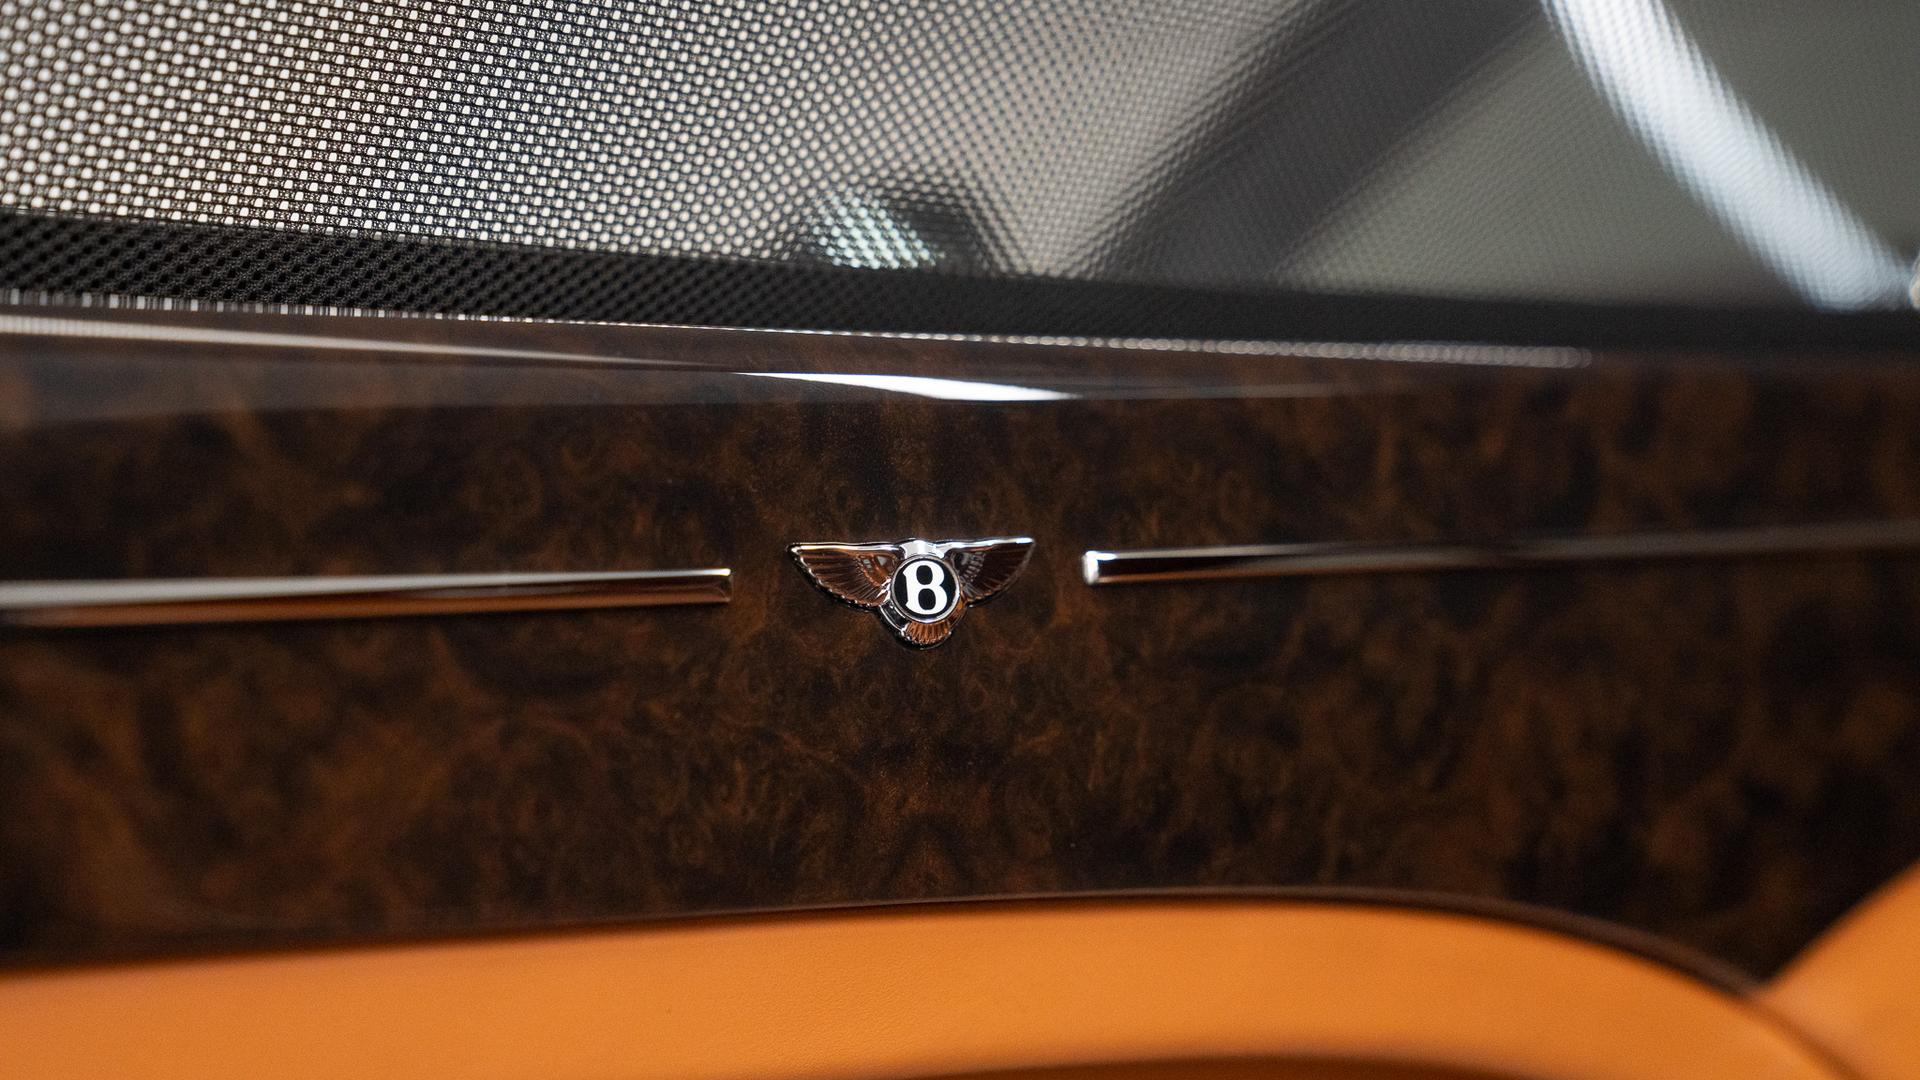 Bentley Mulsanne Photo de179c39-3033-486e-89d4-9eef5aef830e.jpg